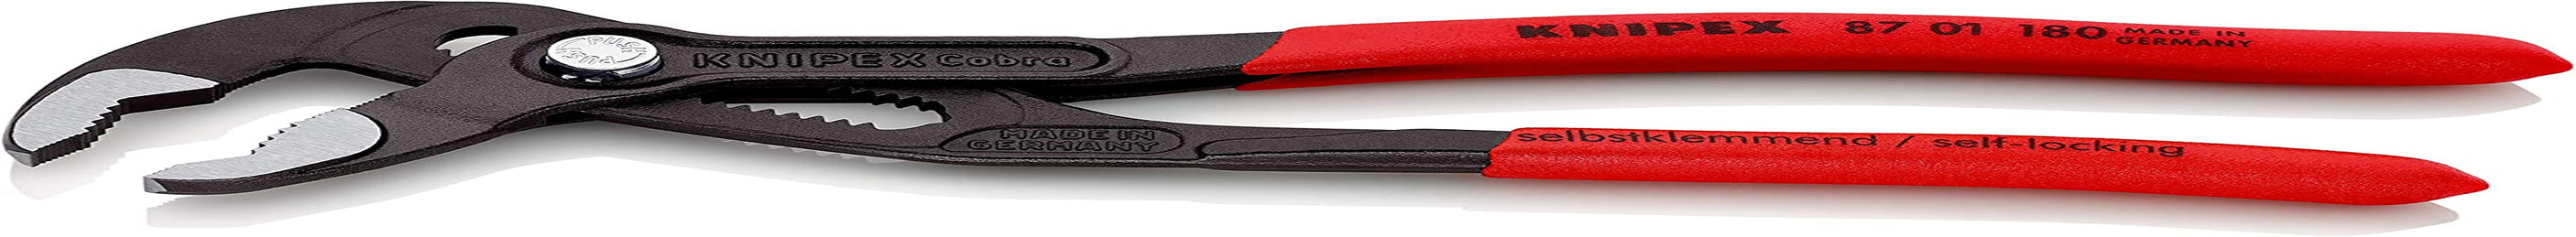 KNIPEX Tools, Knipex 87 01 180 7-1/4-Inch Cobra Pliers